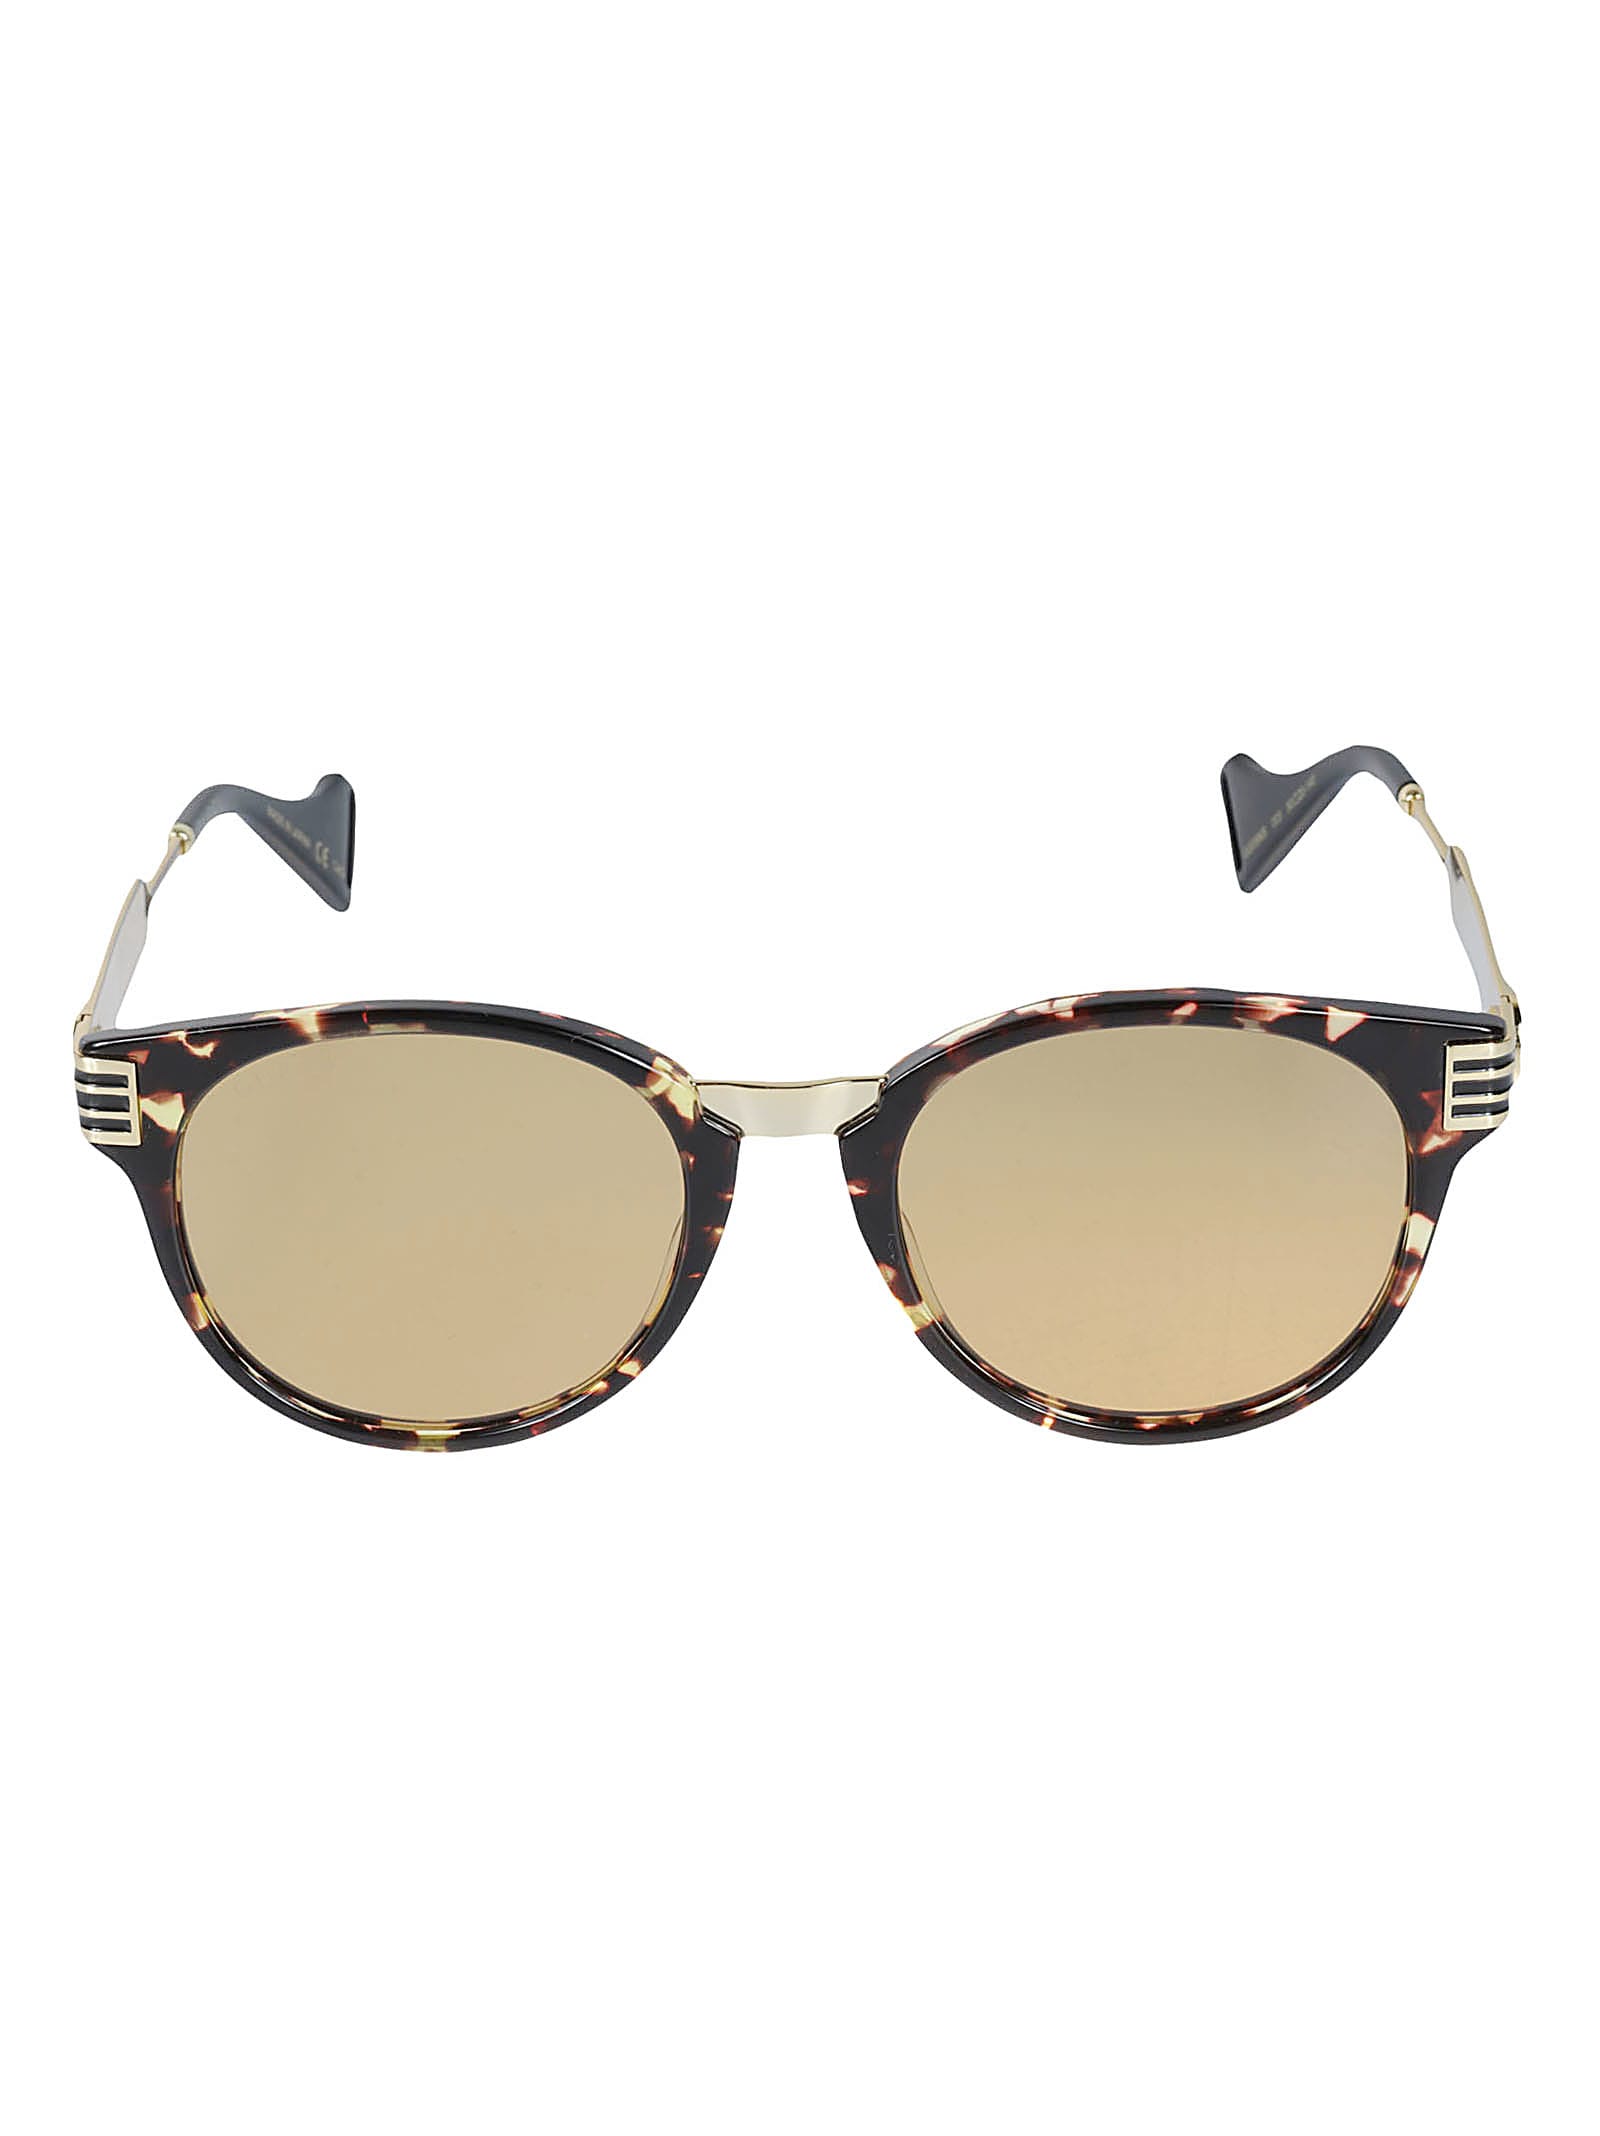 Gucci Eyewear Round Frame Sunglasses | italist